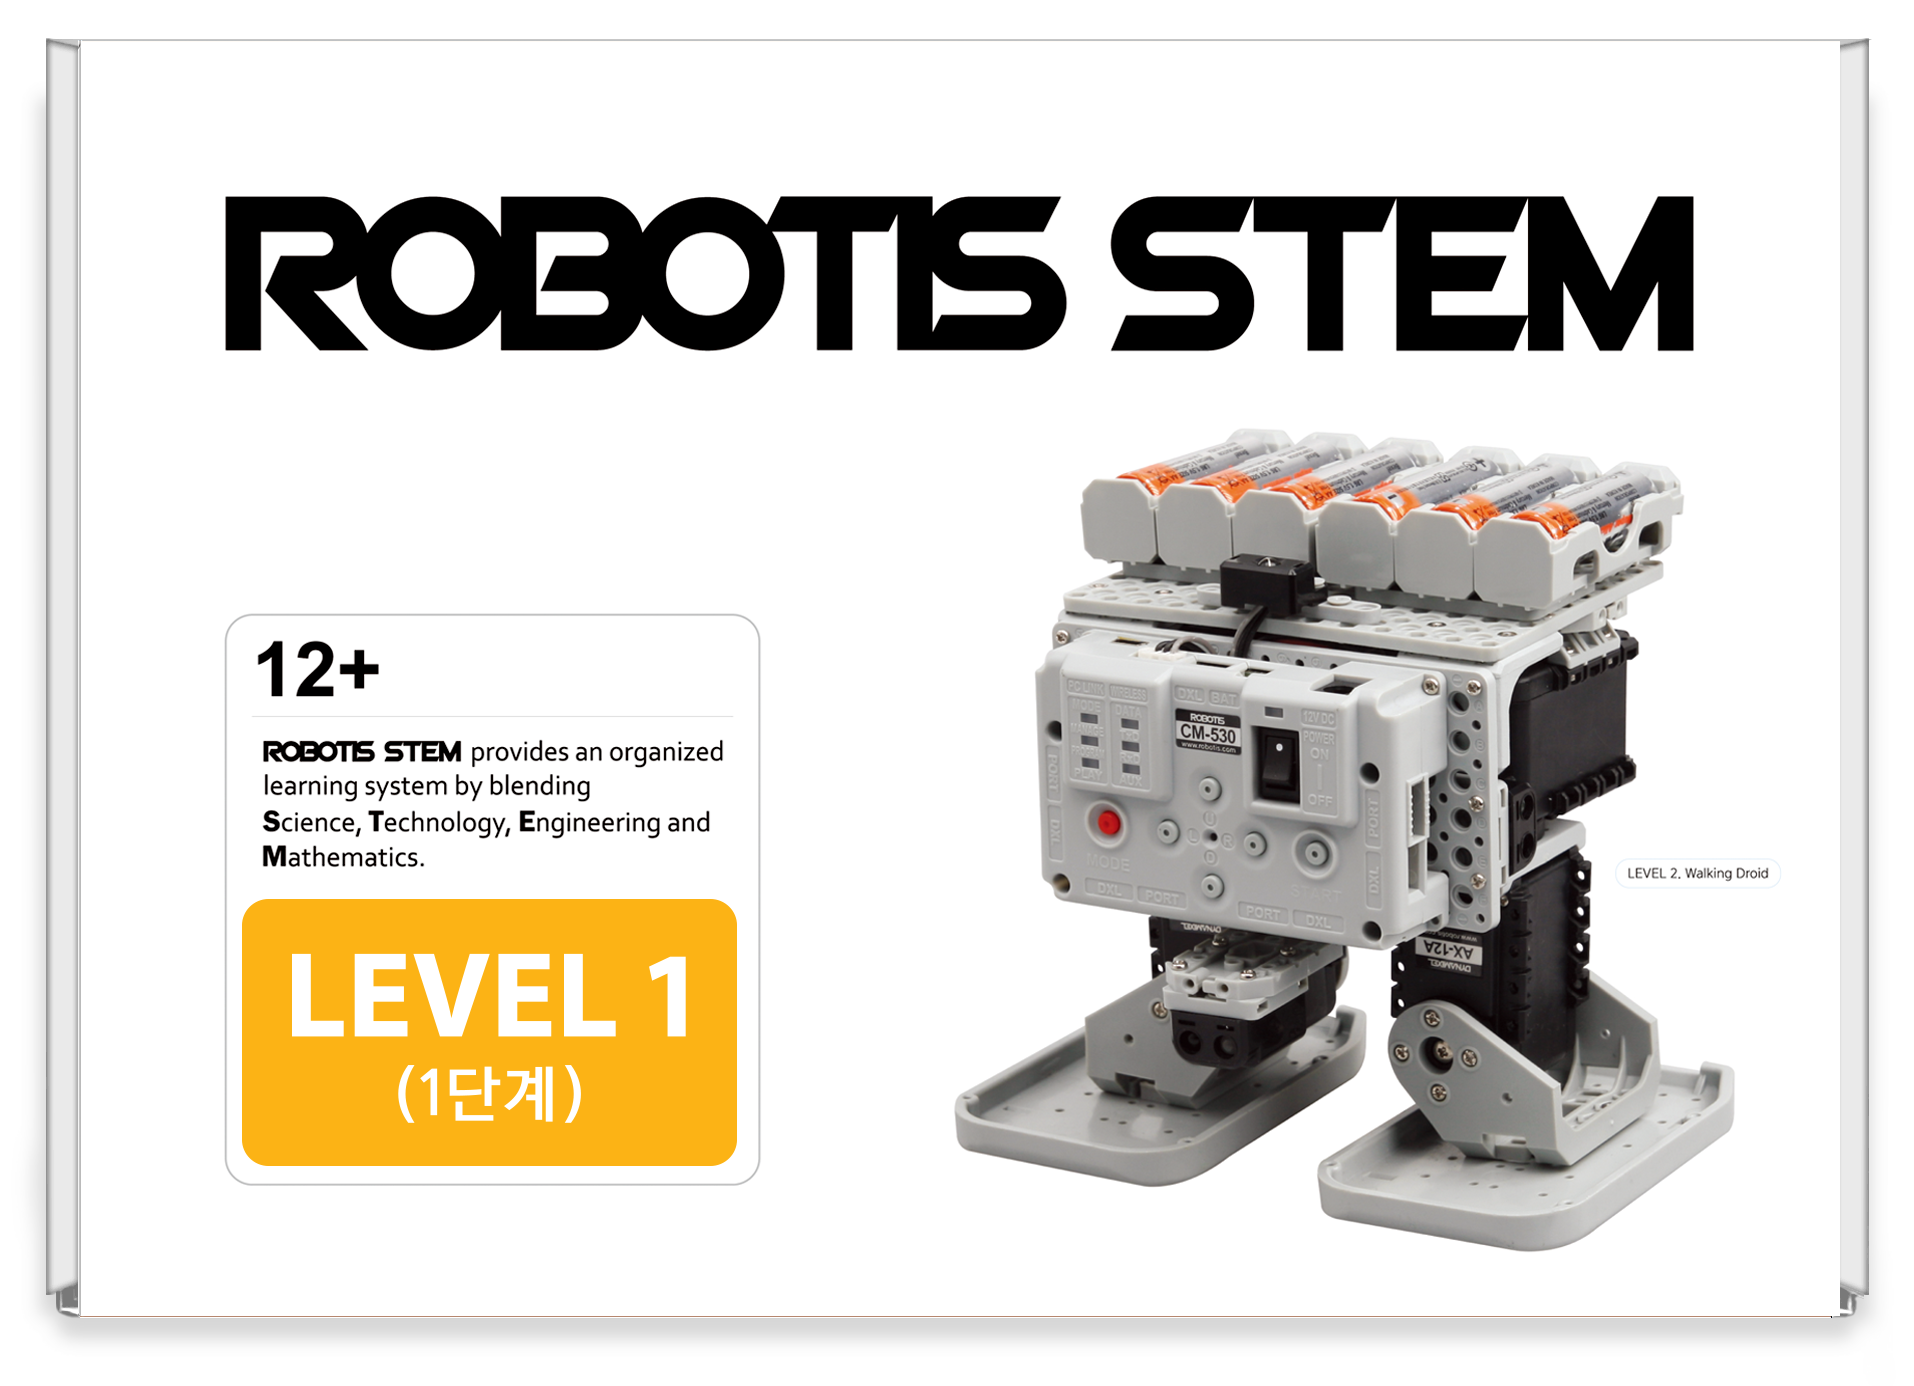 Robotická stavebnice ROBOTIS STEM 1